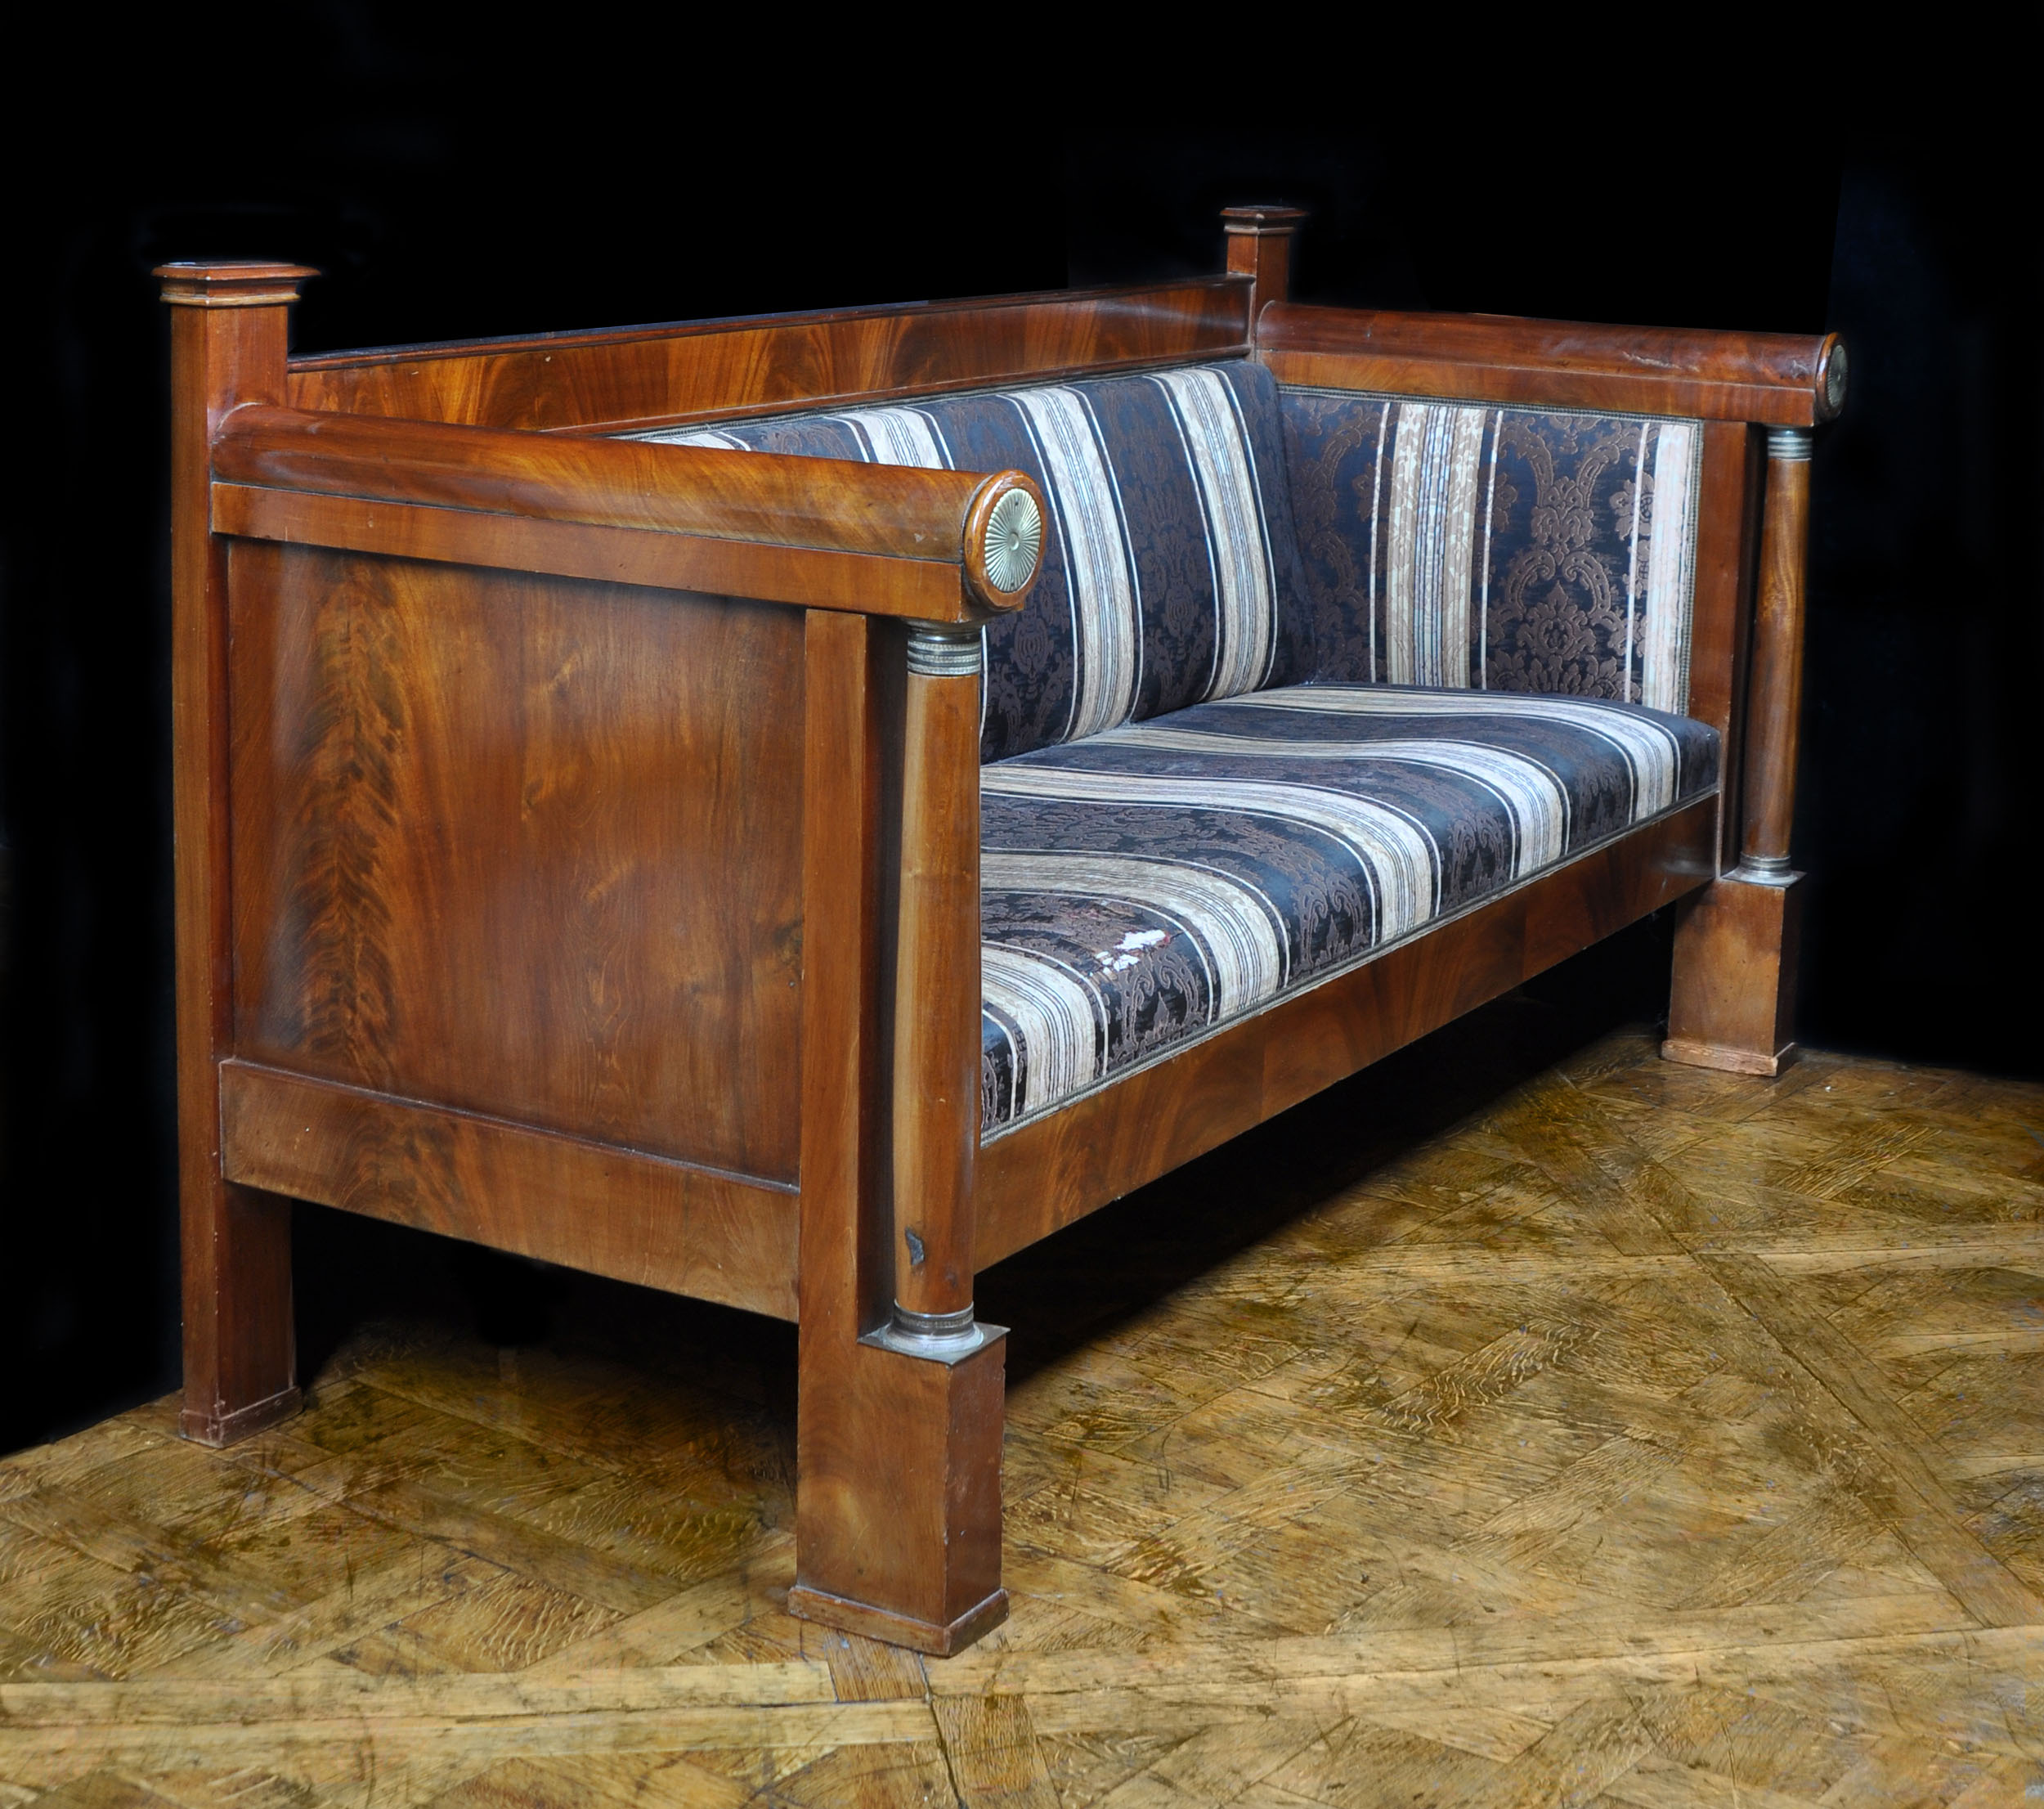 A Mahogany Biedermeir Style Baltic Sofa